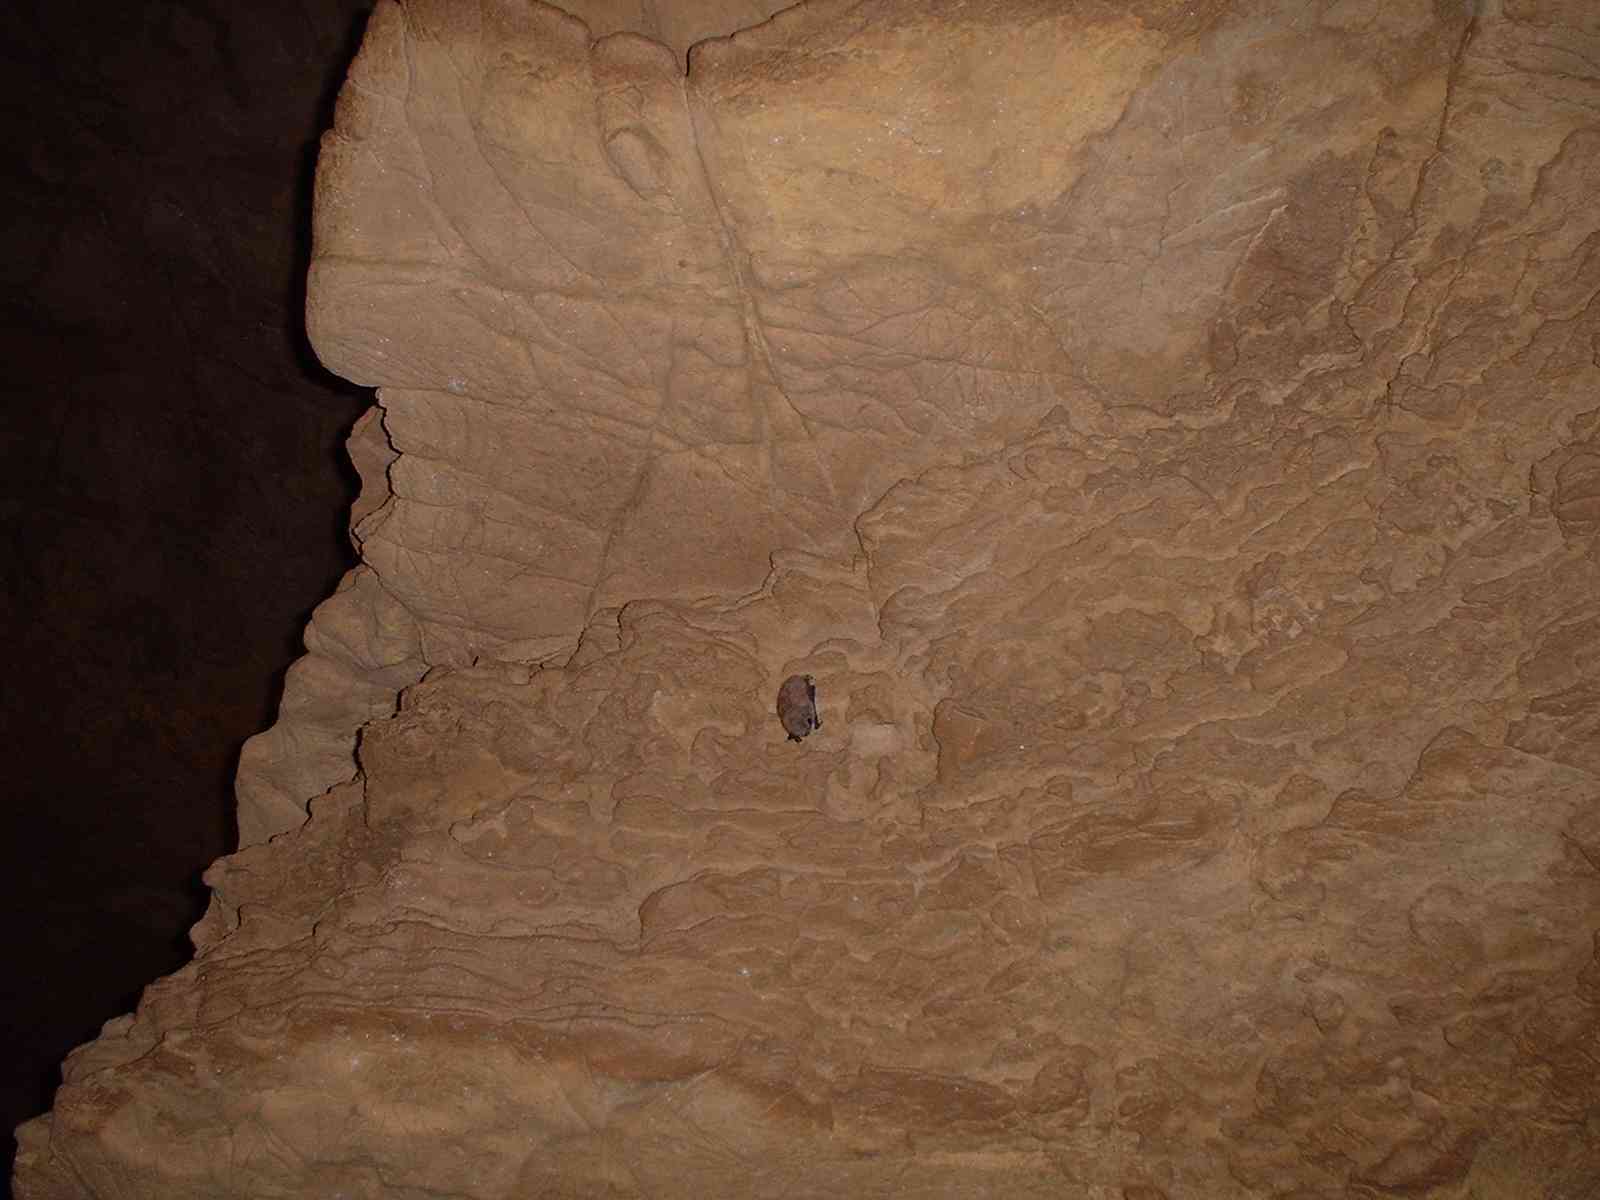 Hibernating bat on a plain wall